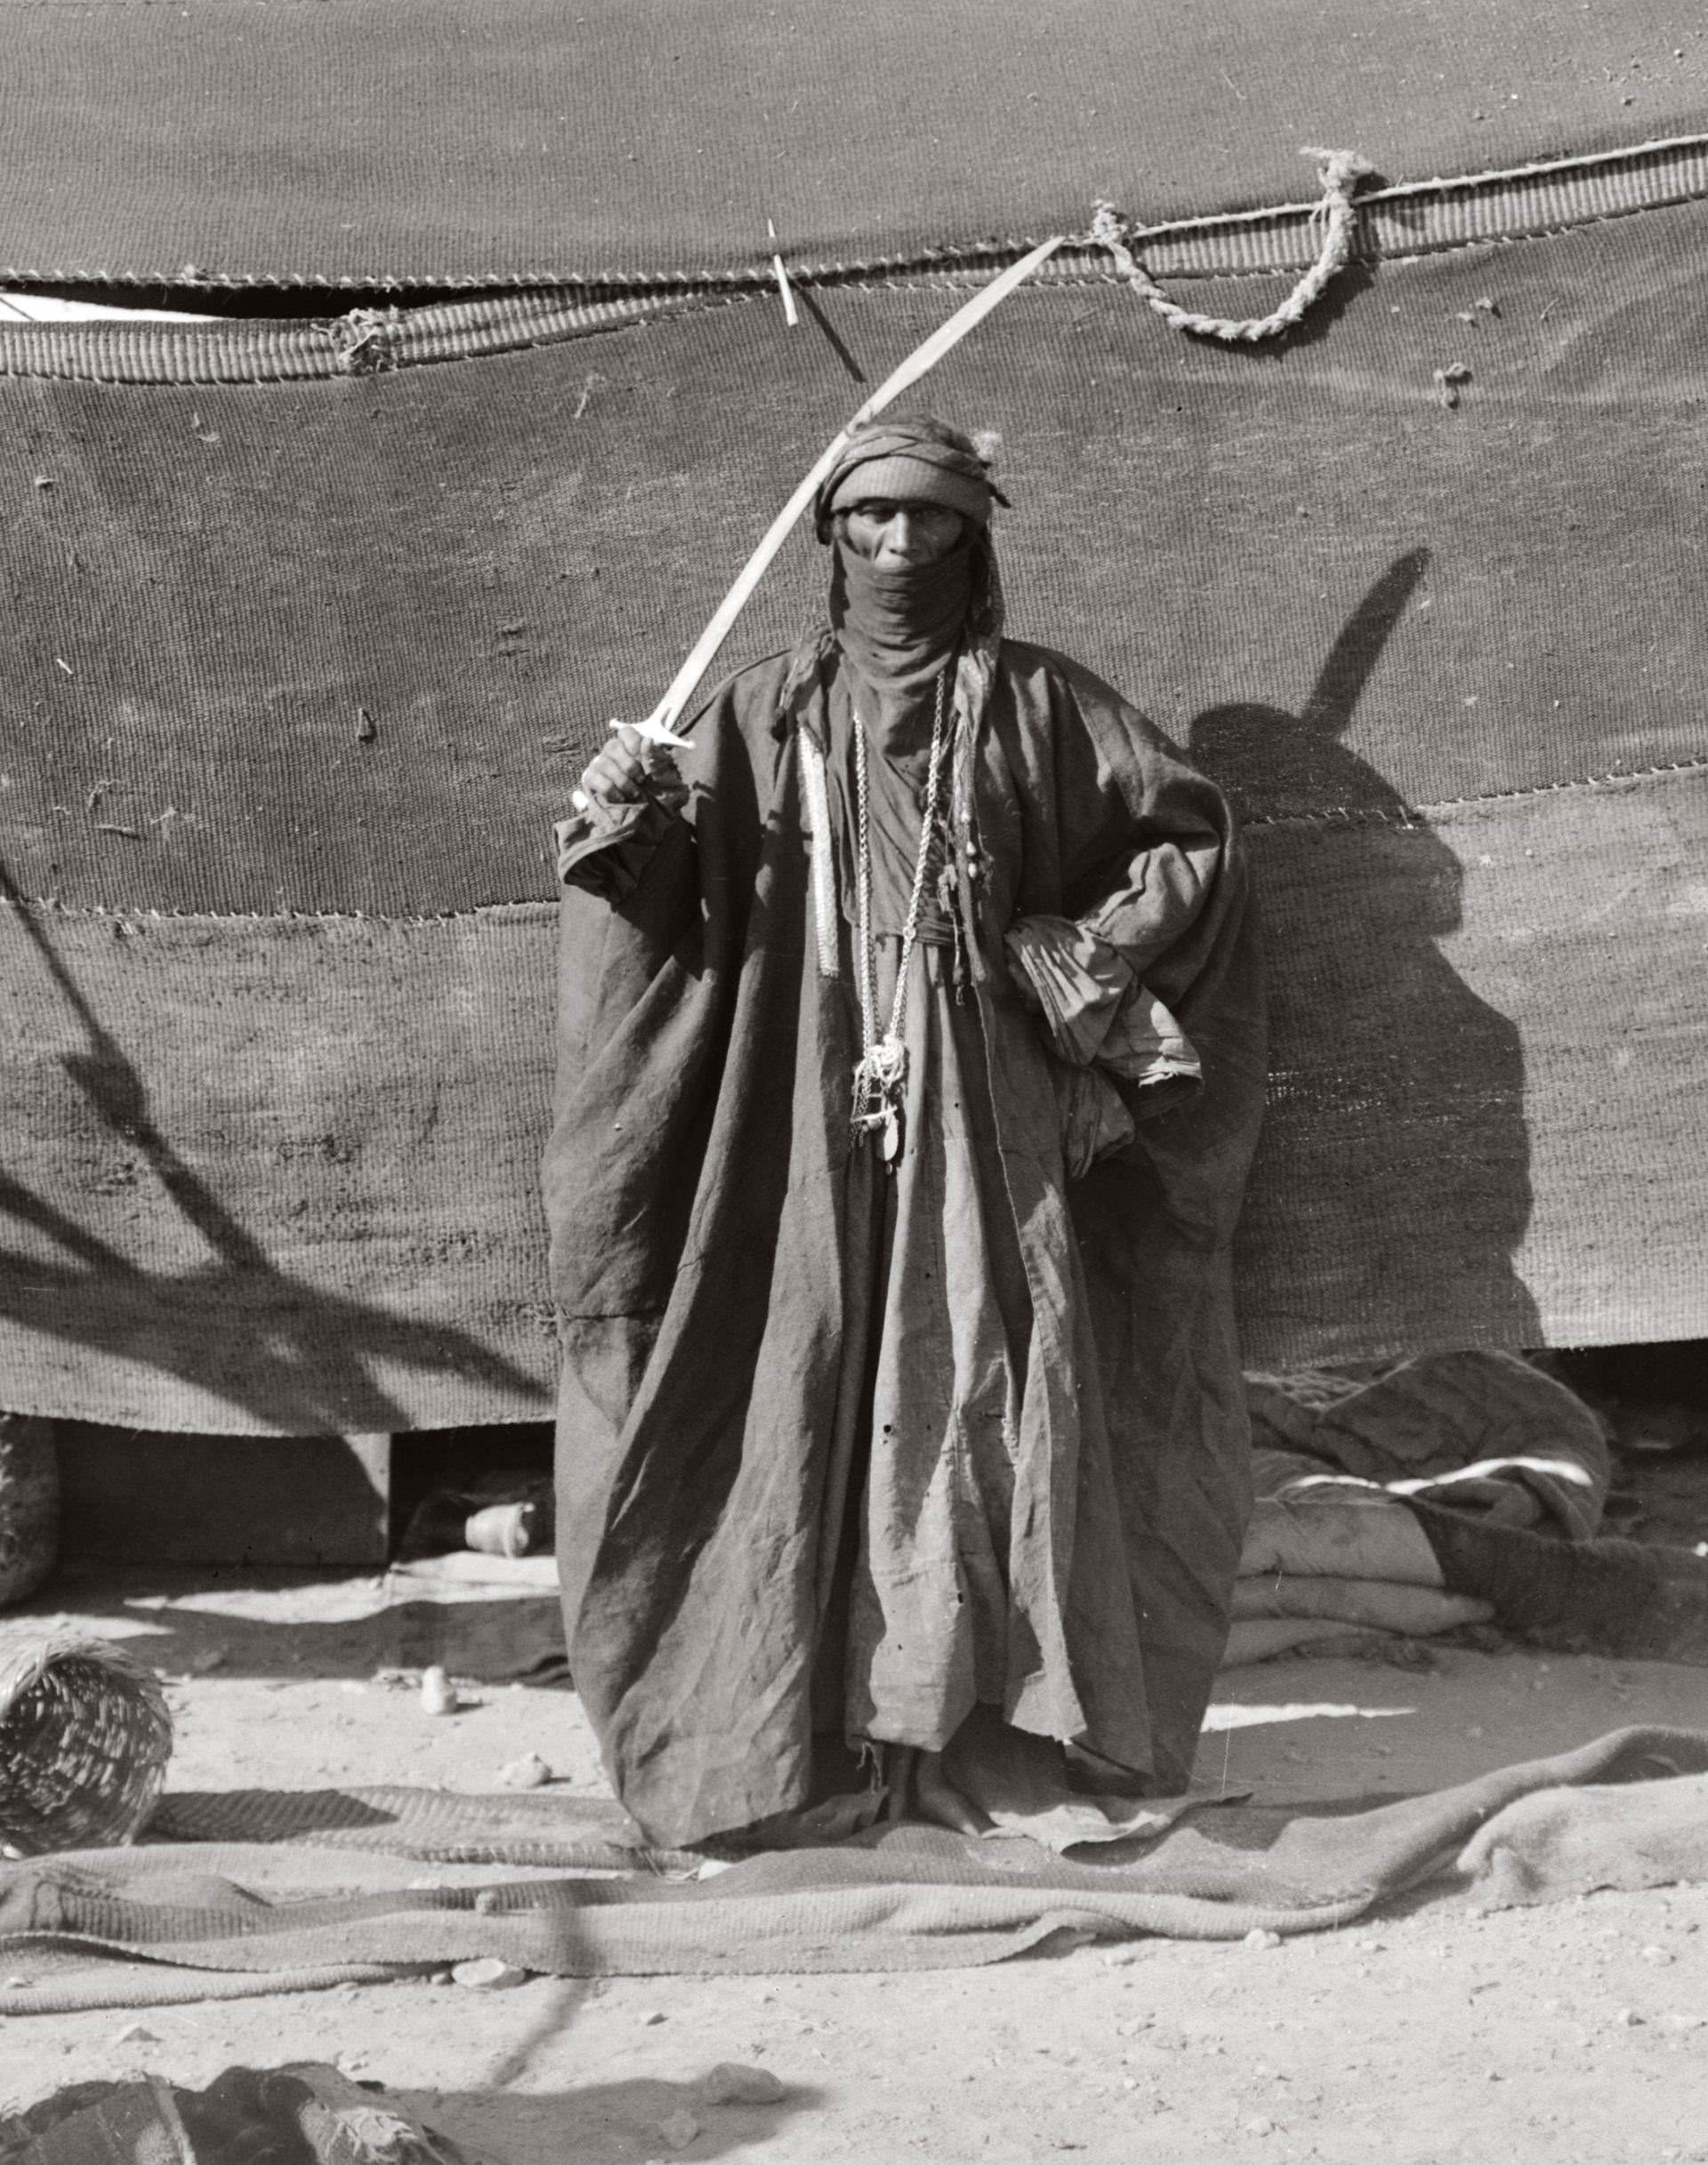 A Bedouin warrior in Saudi Arabia, 1906.